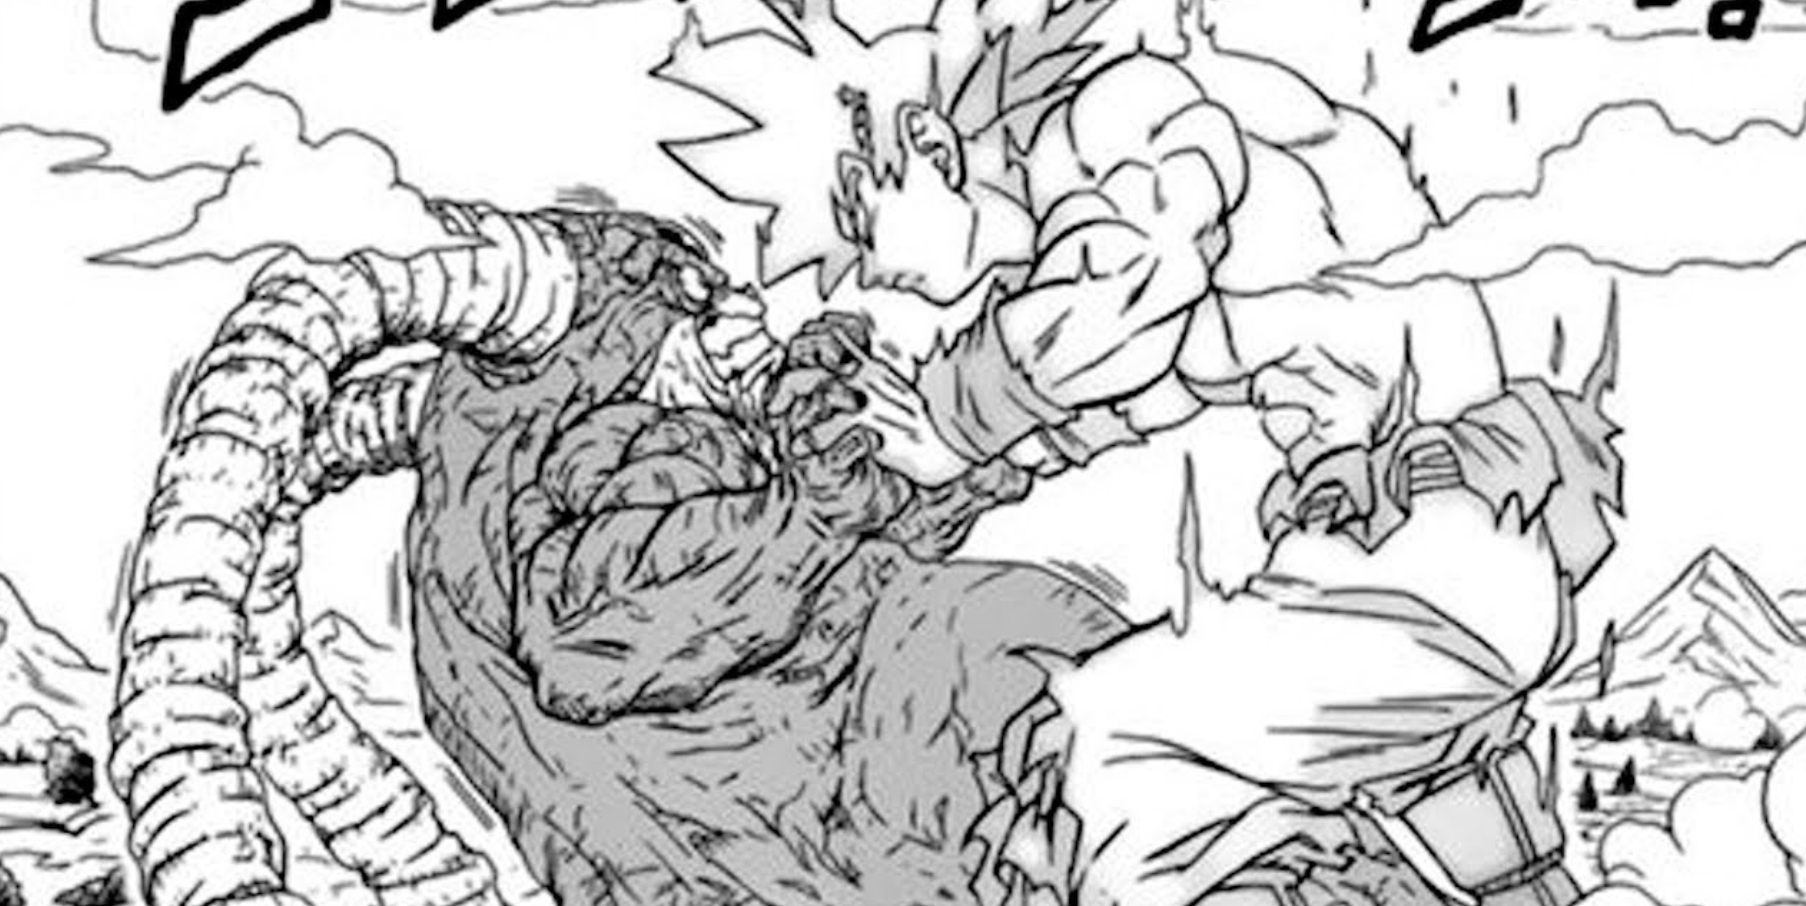 Ultra Instinct Goku's avatar wrestles with a giant Moro in the Dragon Ball Super manga